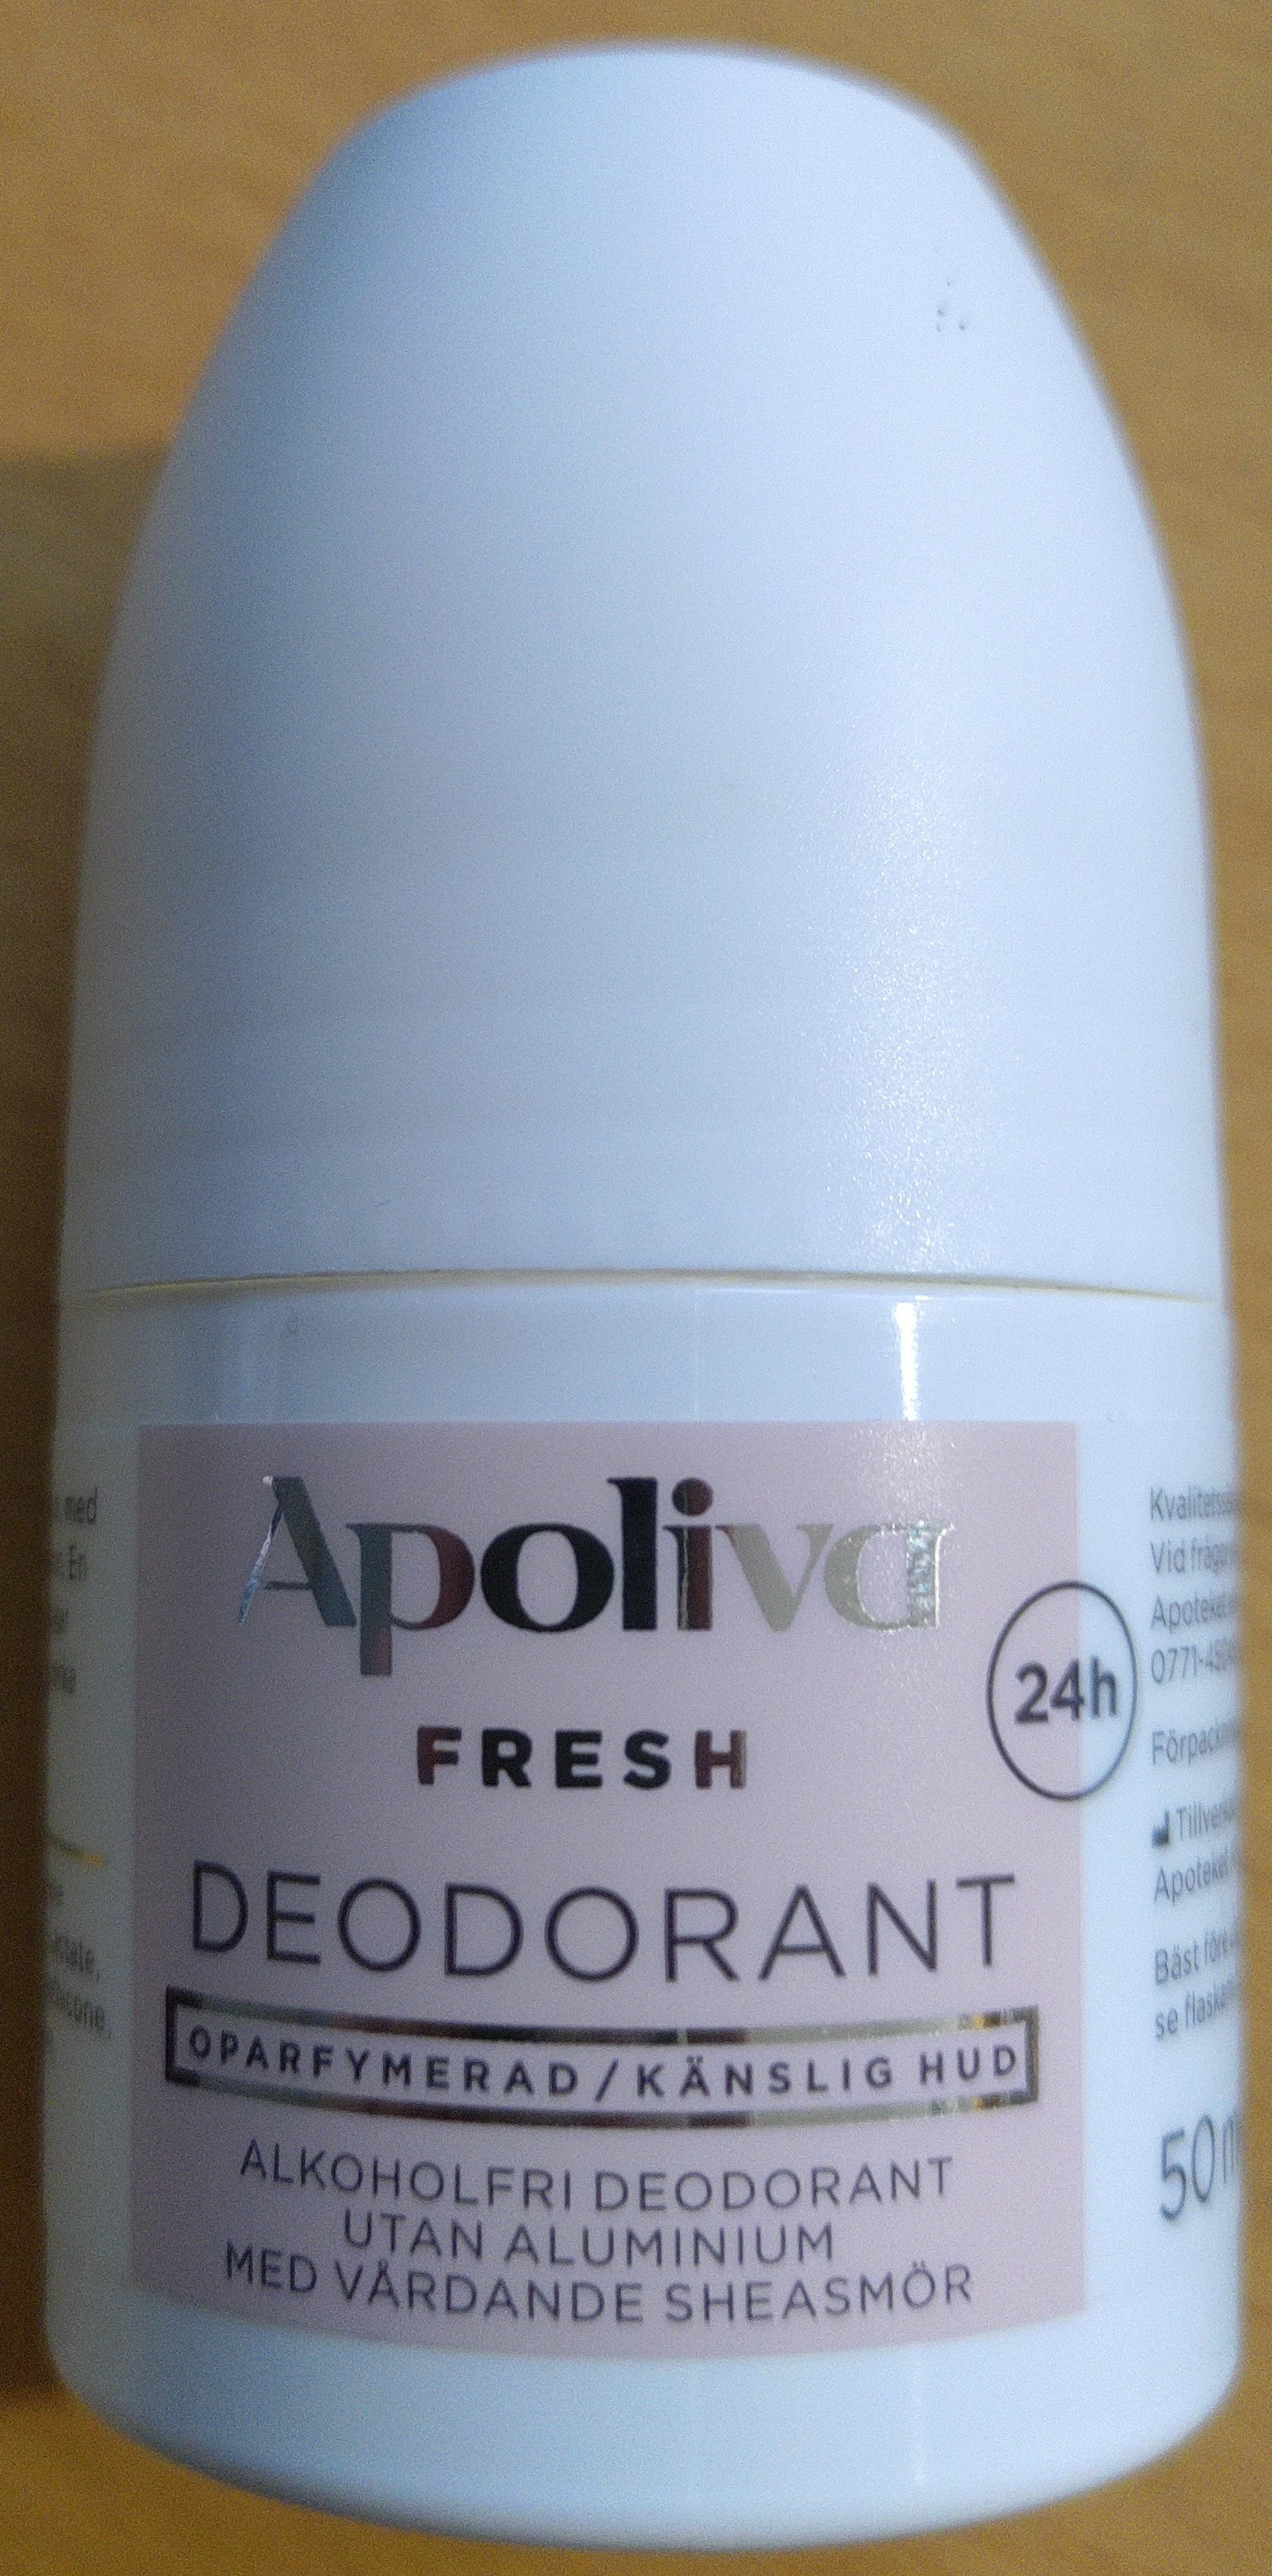 Apoliva Fresh Deodorant: Oparfymerad/känslig hud - Produto - sv